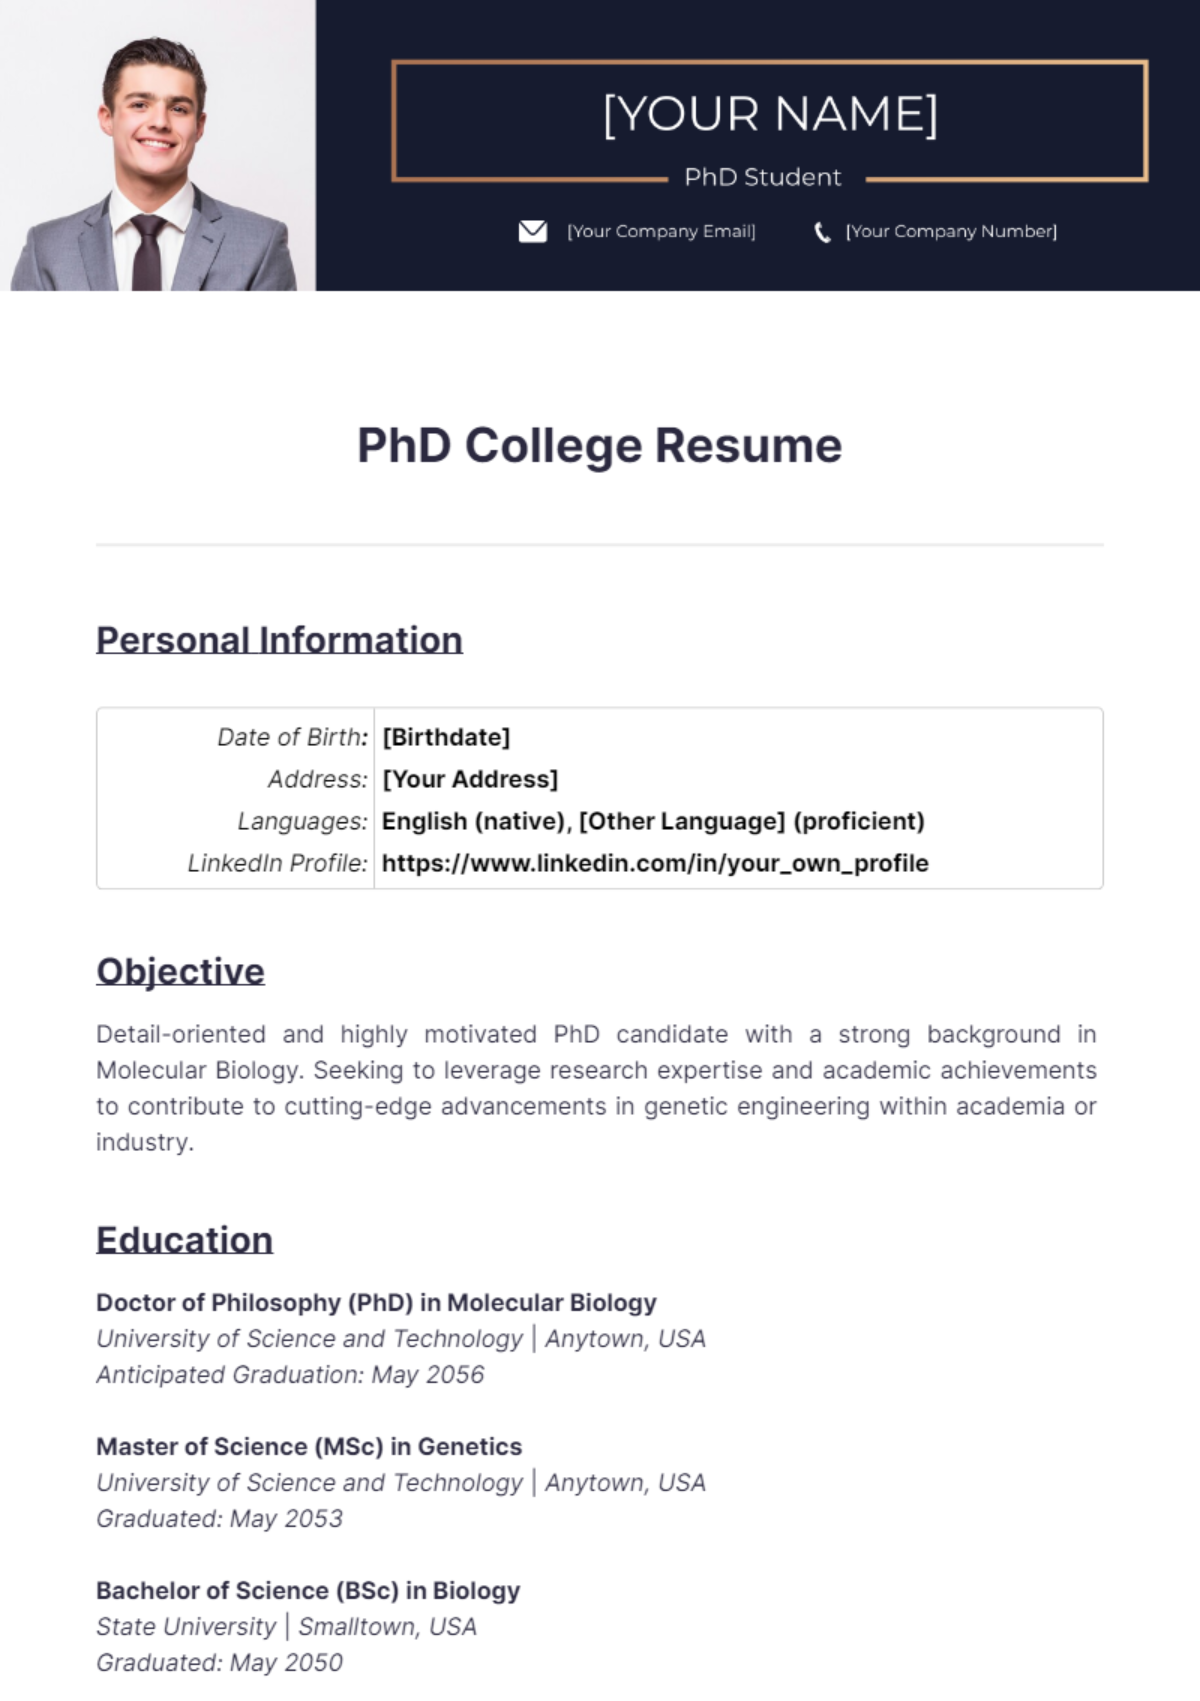 PhD College Student Resume